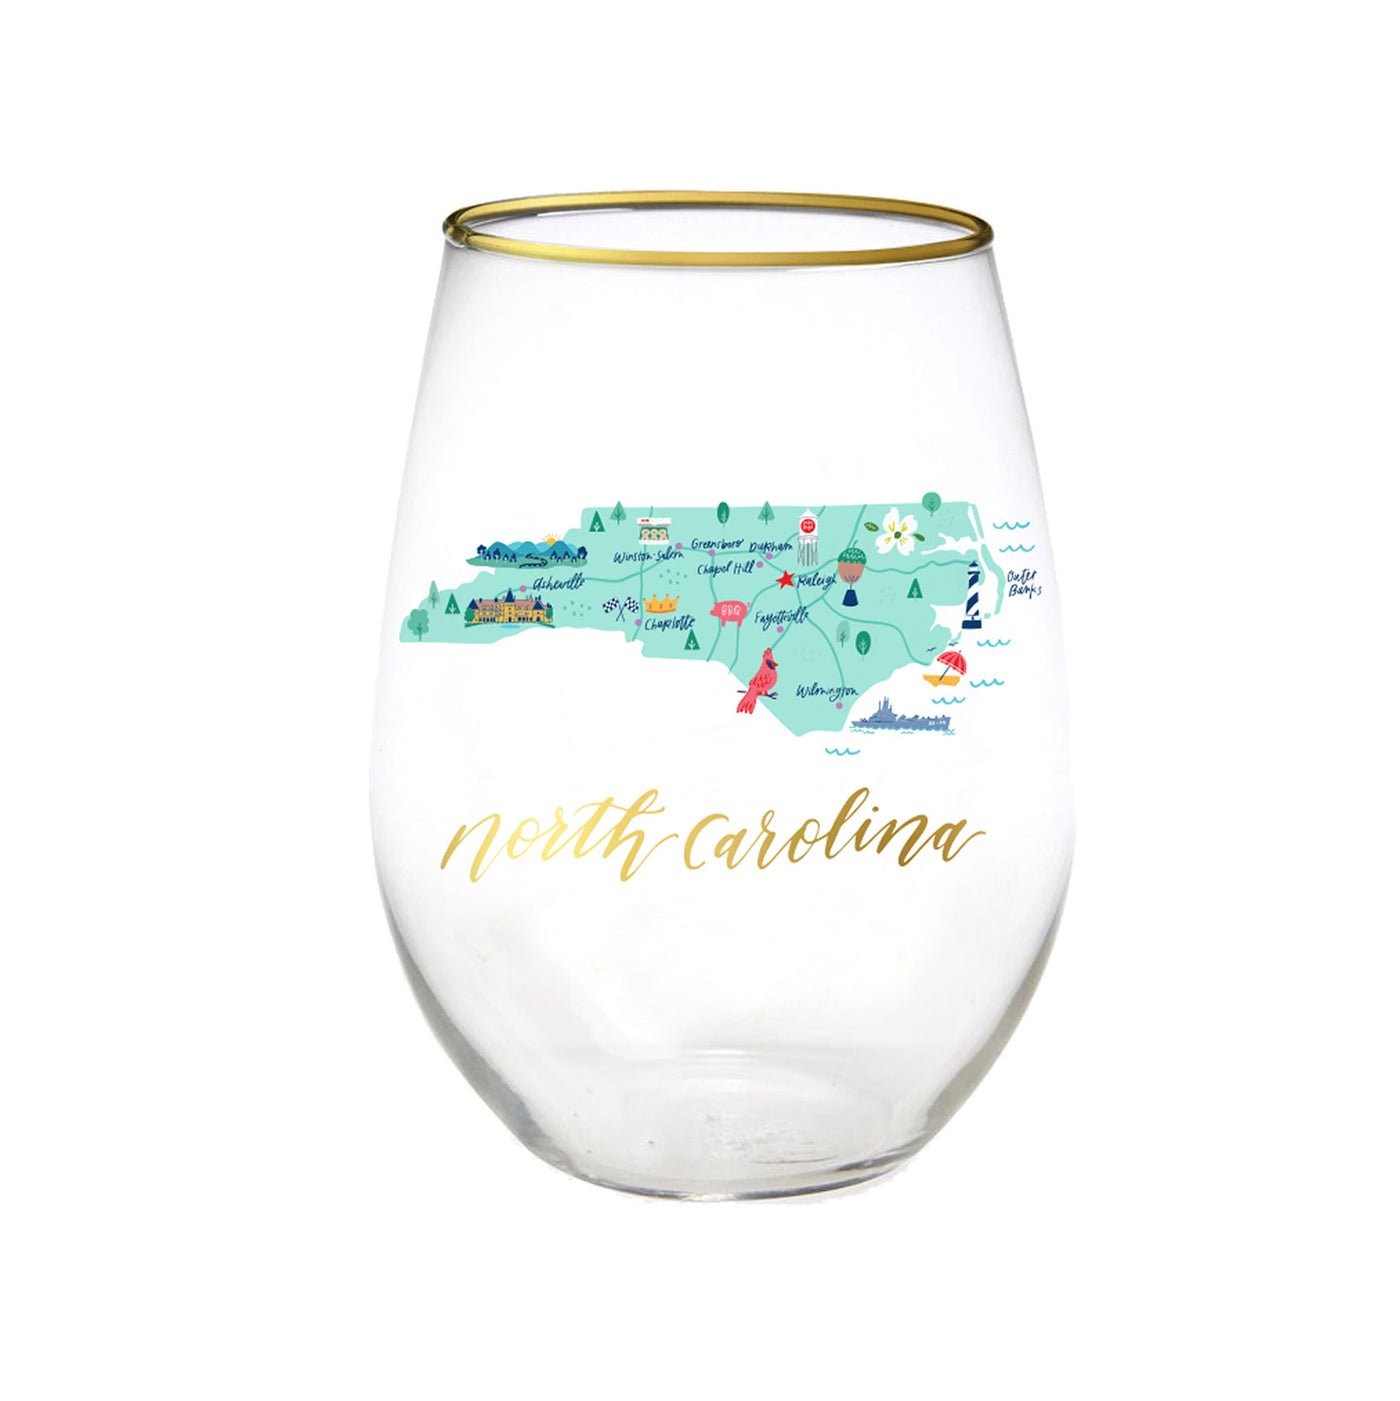 North Carolina Stemless Wine Glass - Mary Square, LLC